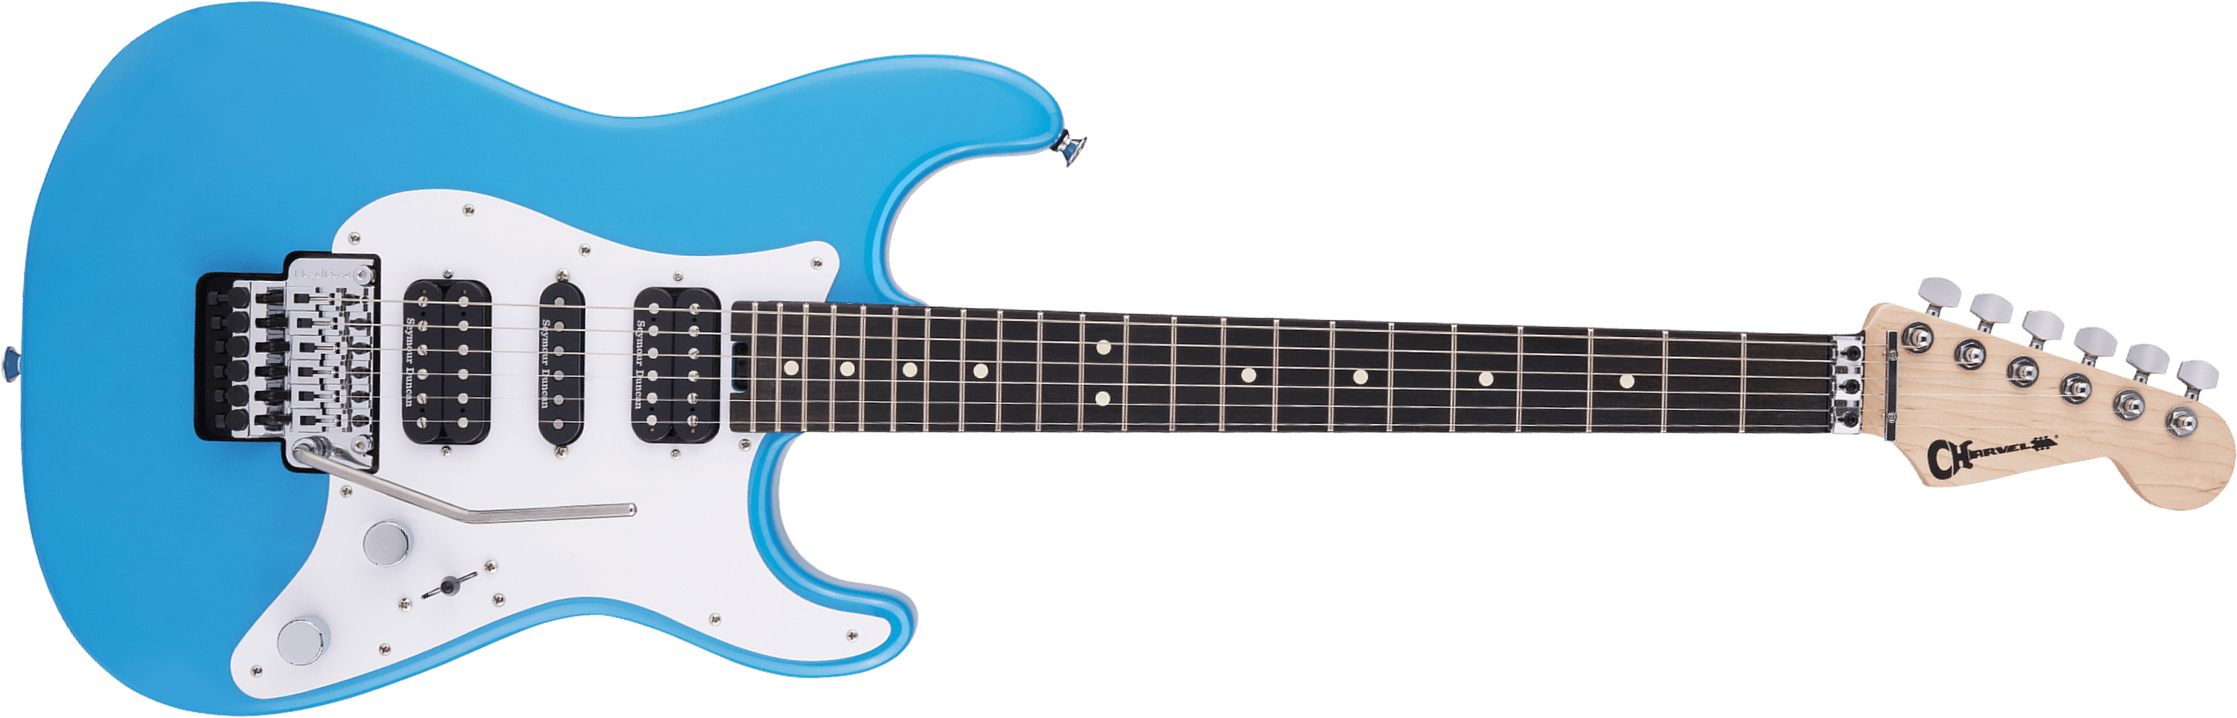 Charvel So-cal Style 1 Hsh Fr E Pro-mod Seymour Duncan Eb - Robbin's Egg Blue - Guitarra eléctrica con forma de str. - Main picture